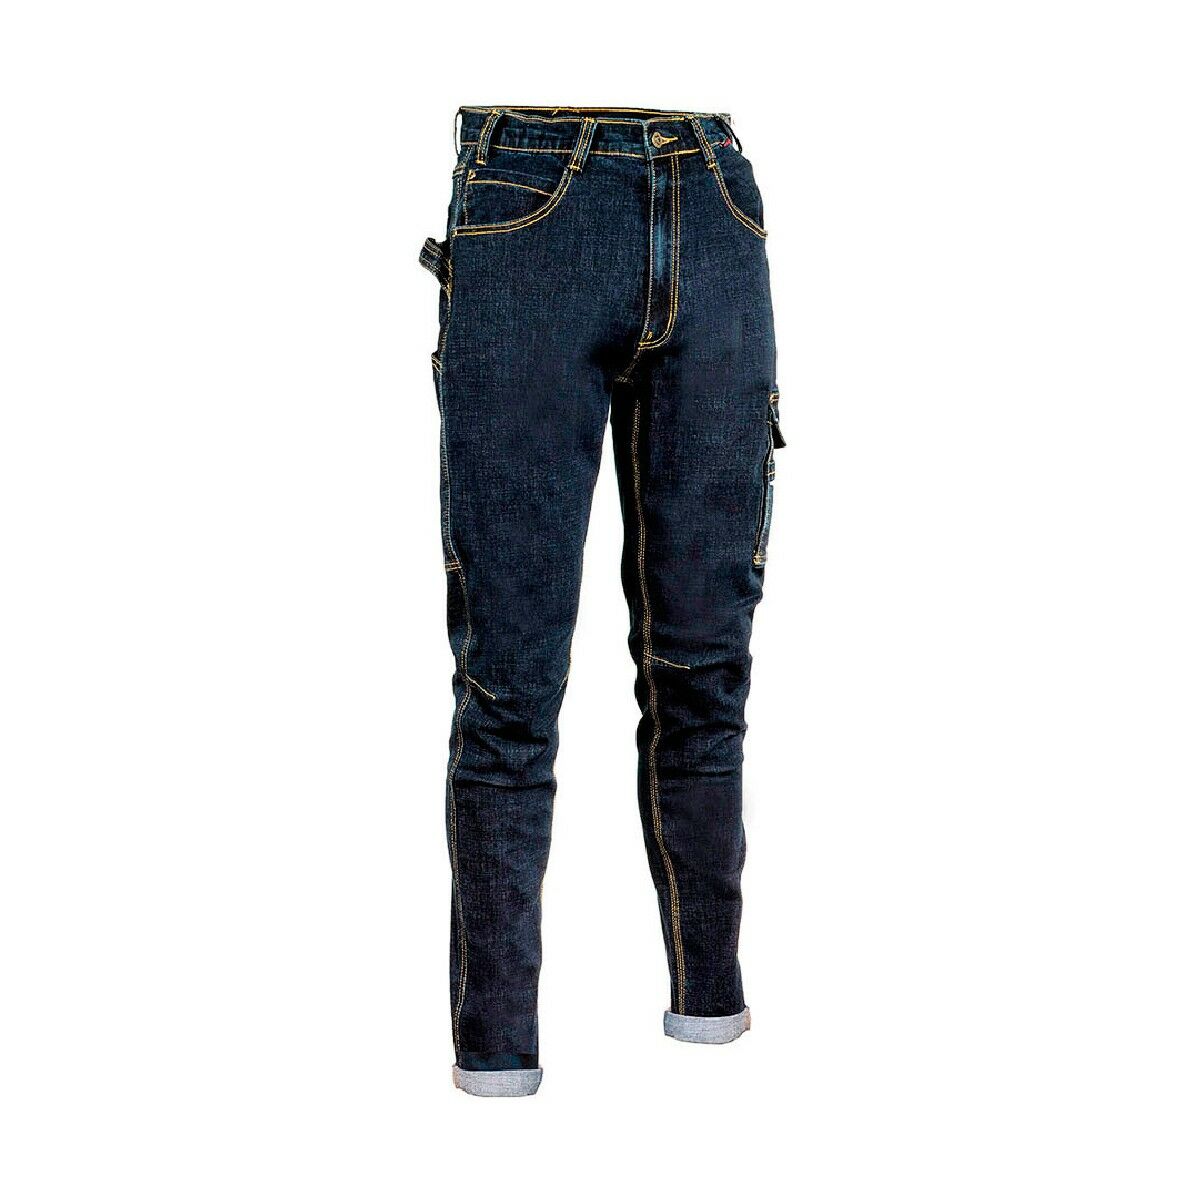 Pantaloni de siguranță Cofra Cabries Profesionist Bleumarin - Mărime 54